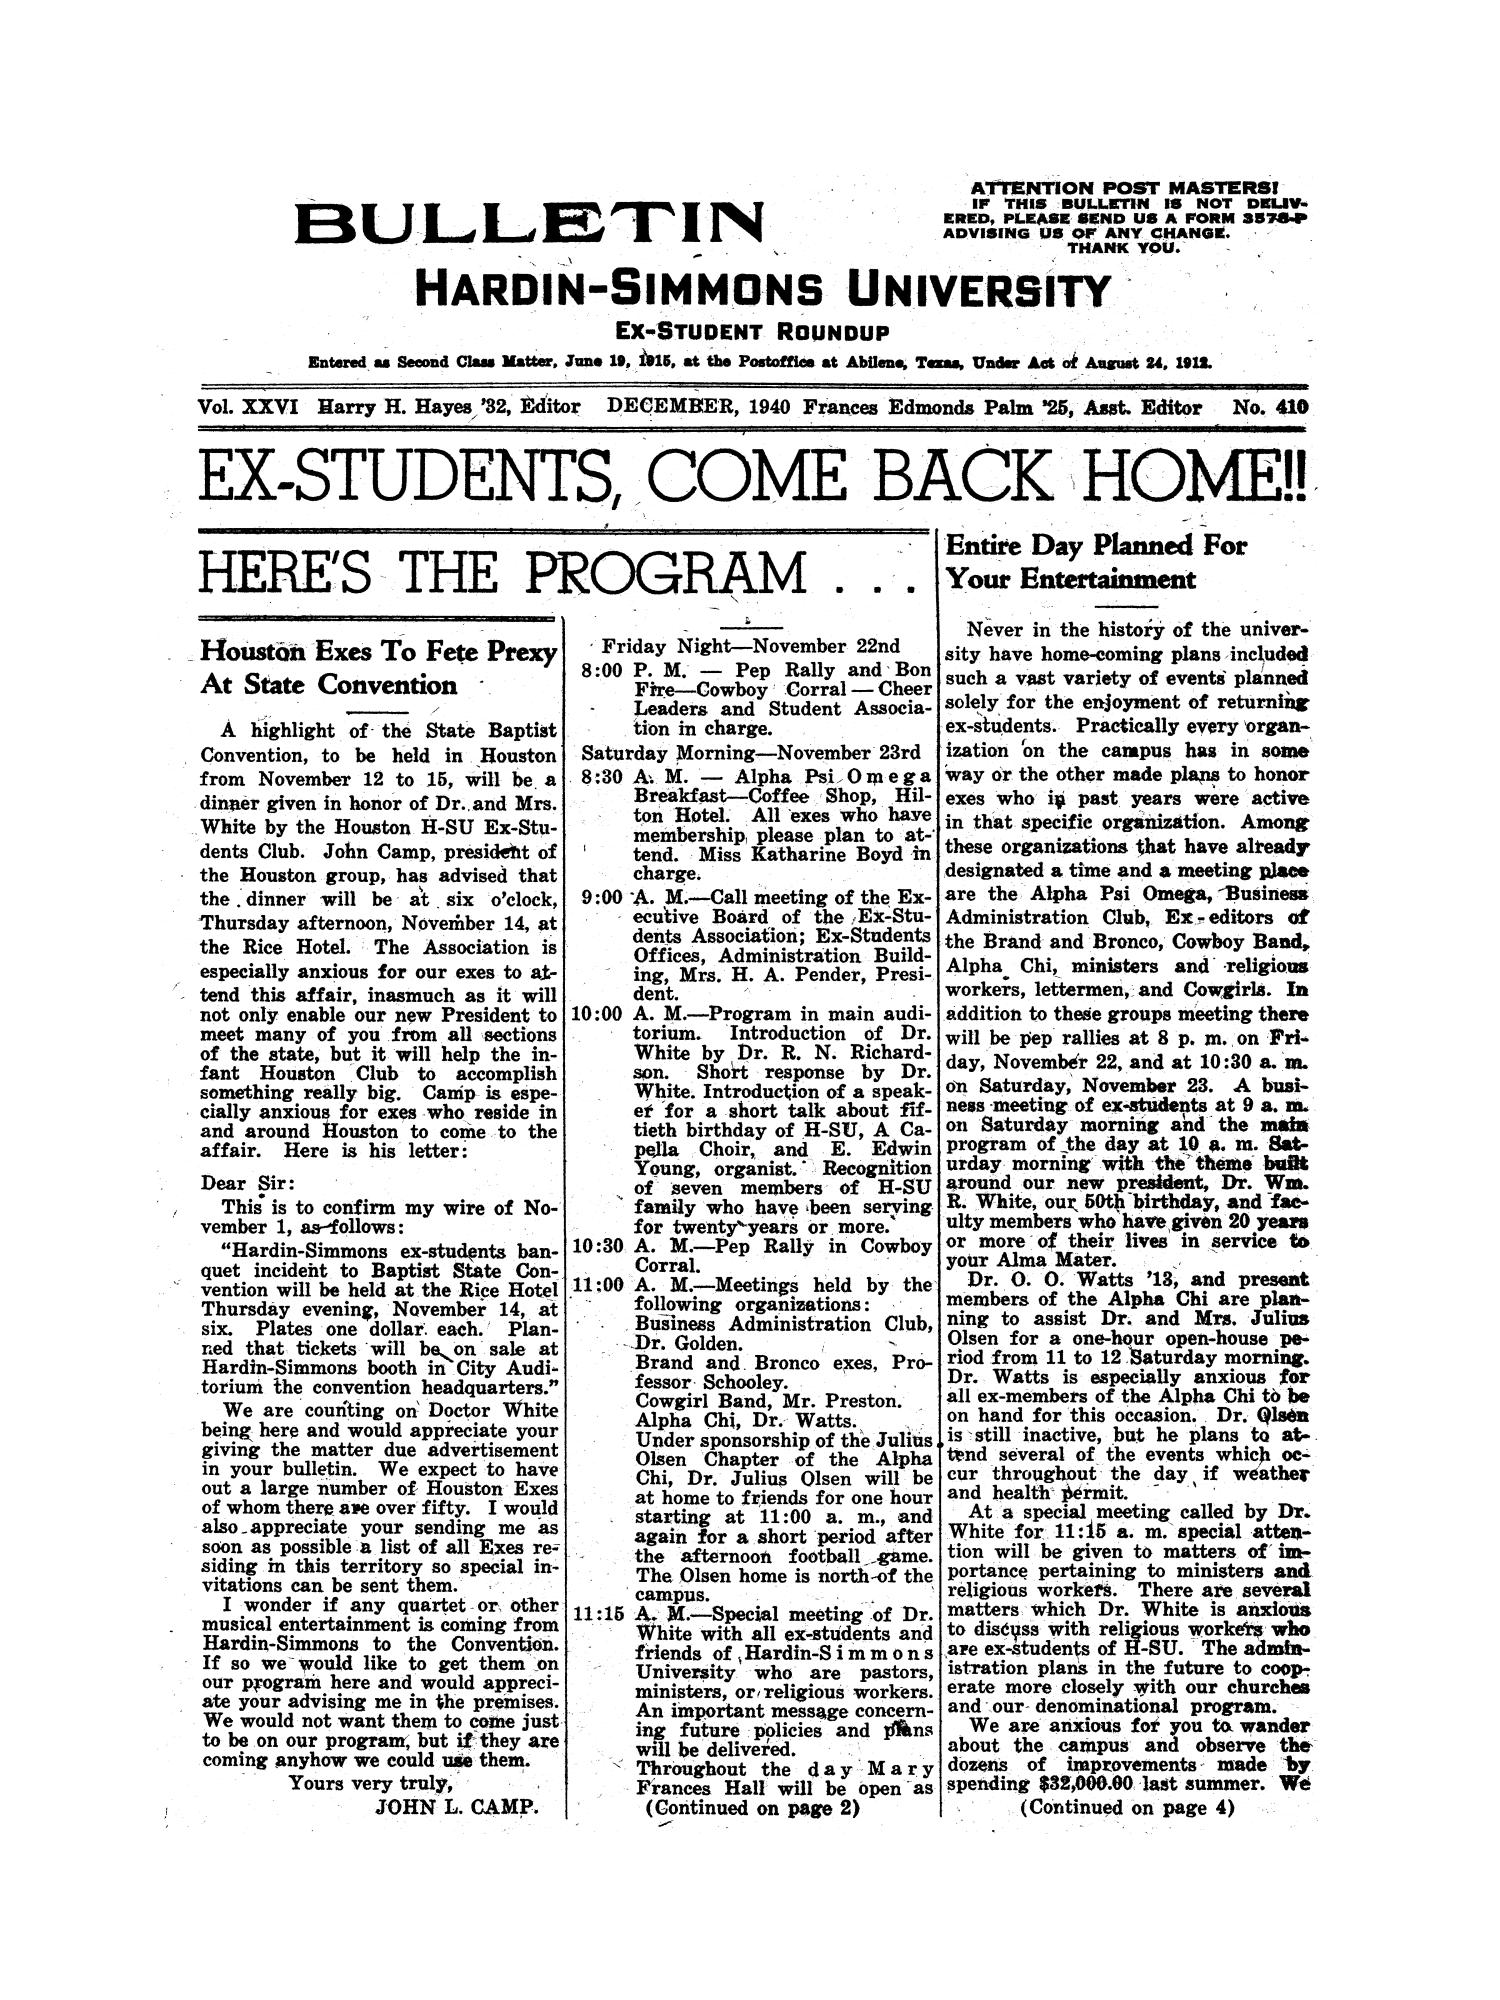 Bulletin: Hardin-Simmons University Ex-Student Roundup, December 1940
                                                
                                                    1
                                                